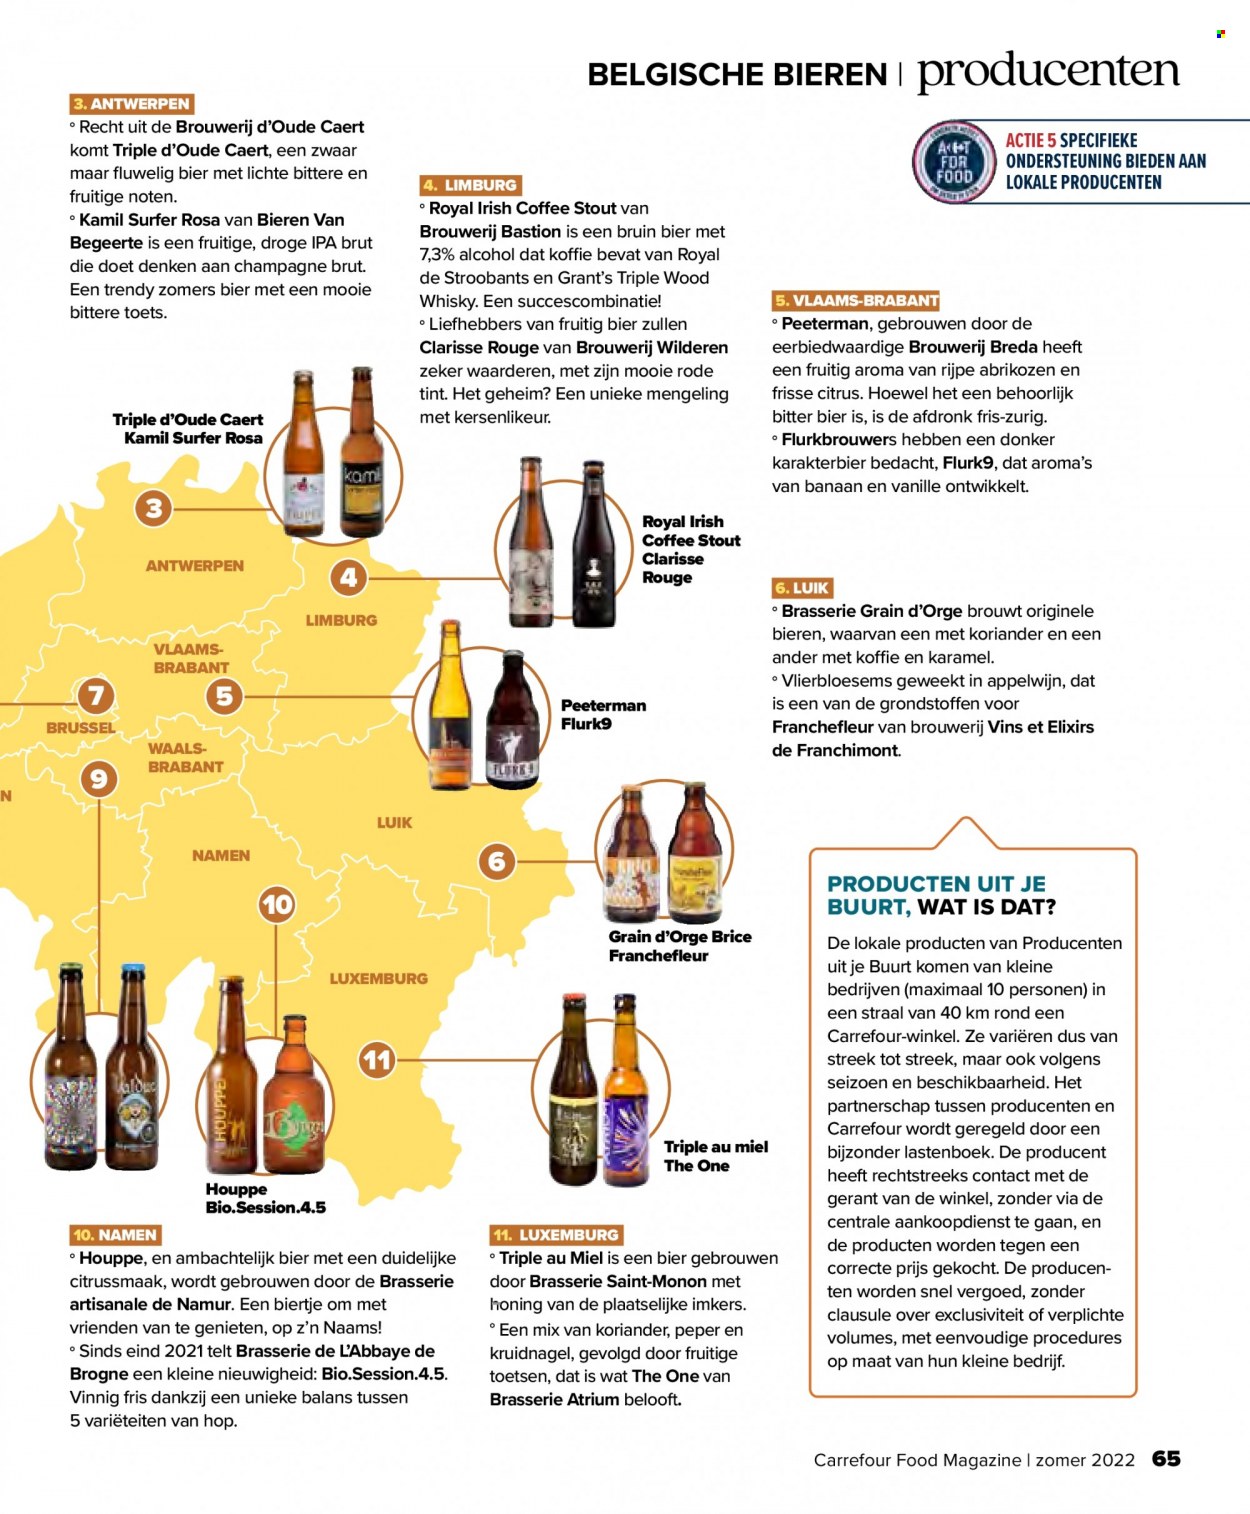 thumbnail - Carrefour-aanbieding - 29/06/2022 - 17/08/2022 -  producten in de aanbieding - The One, bier, IPA, banaan, abrikozen, kruidnagel, kruidnagels, koffie, champagne, Grant‘s, whisky. Pagina 65.